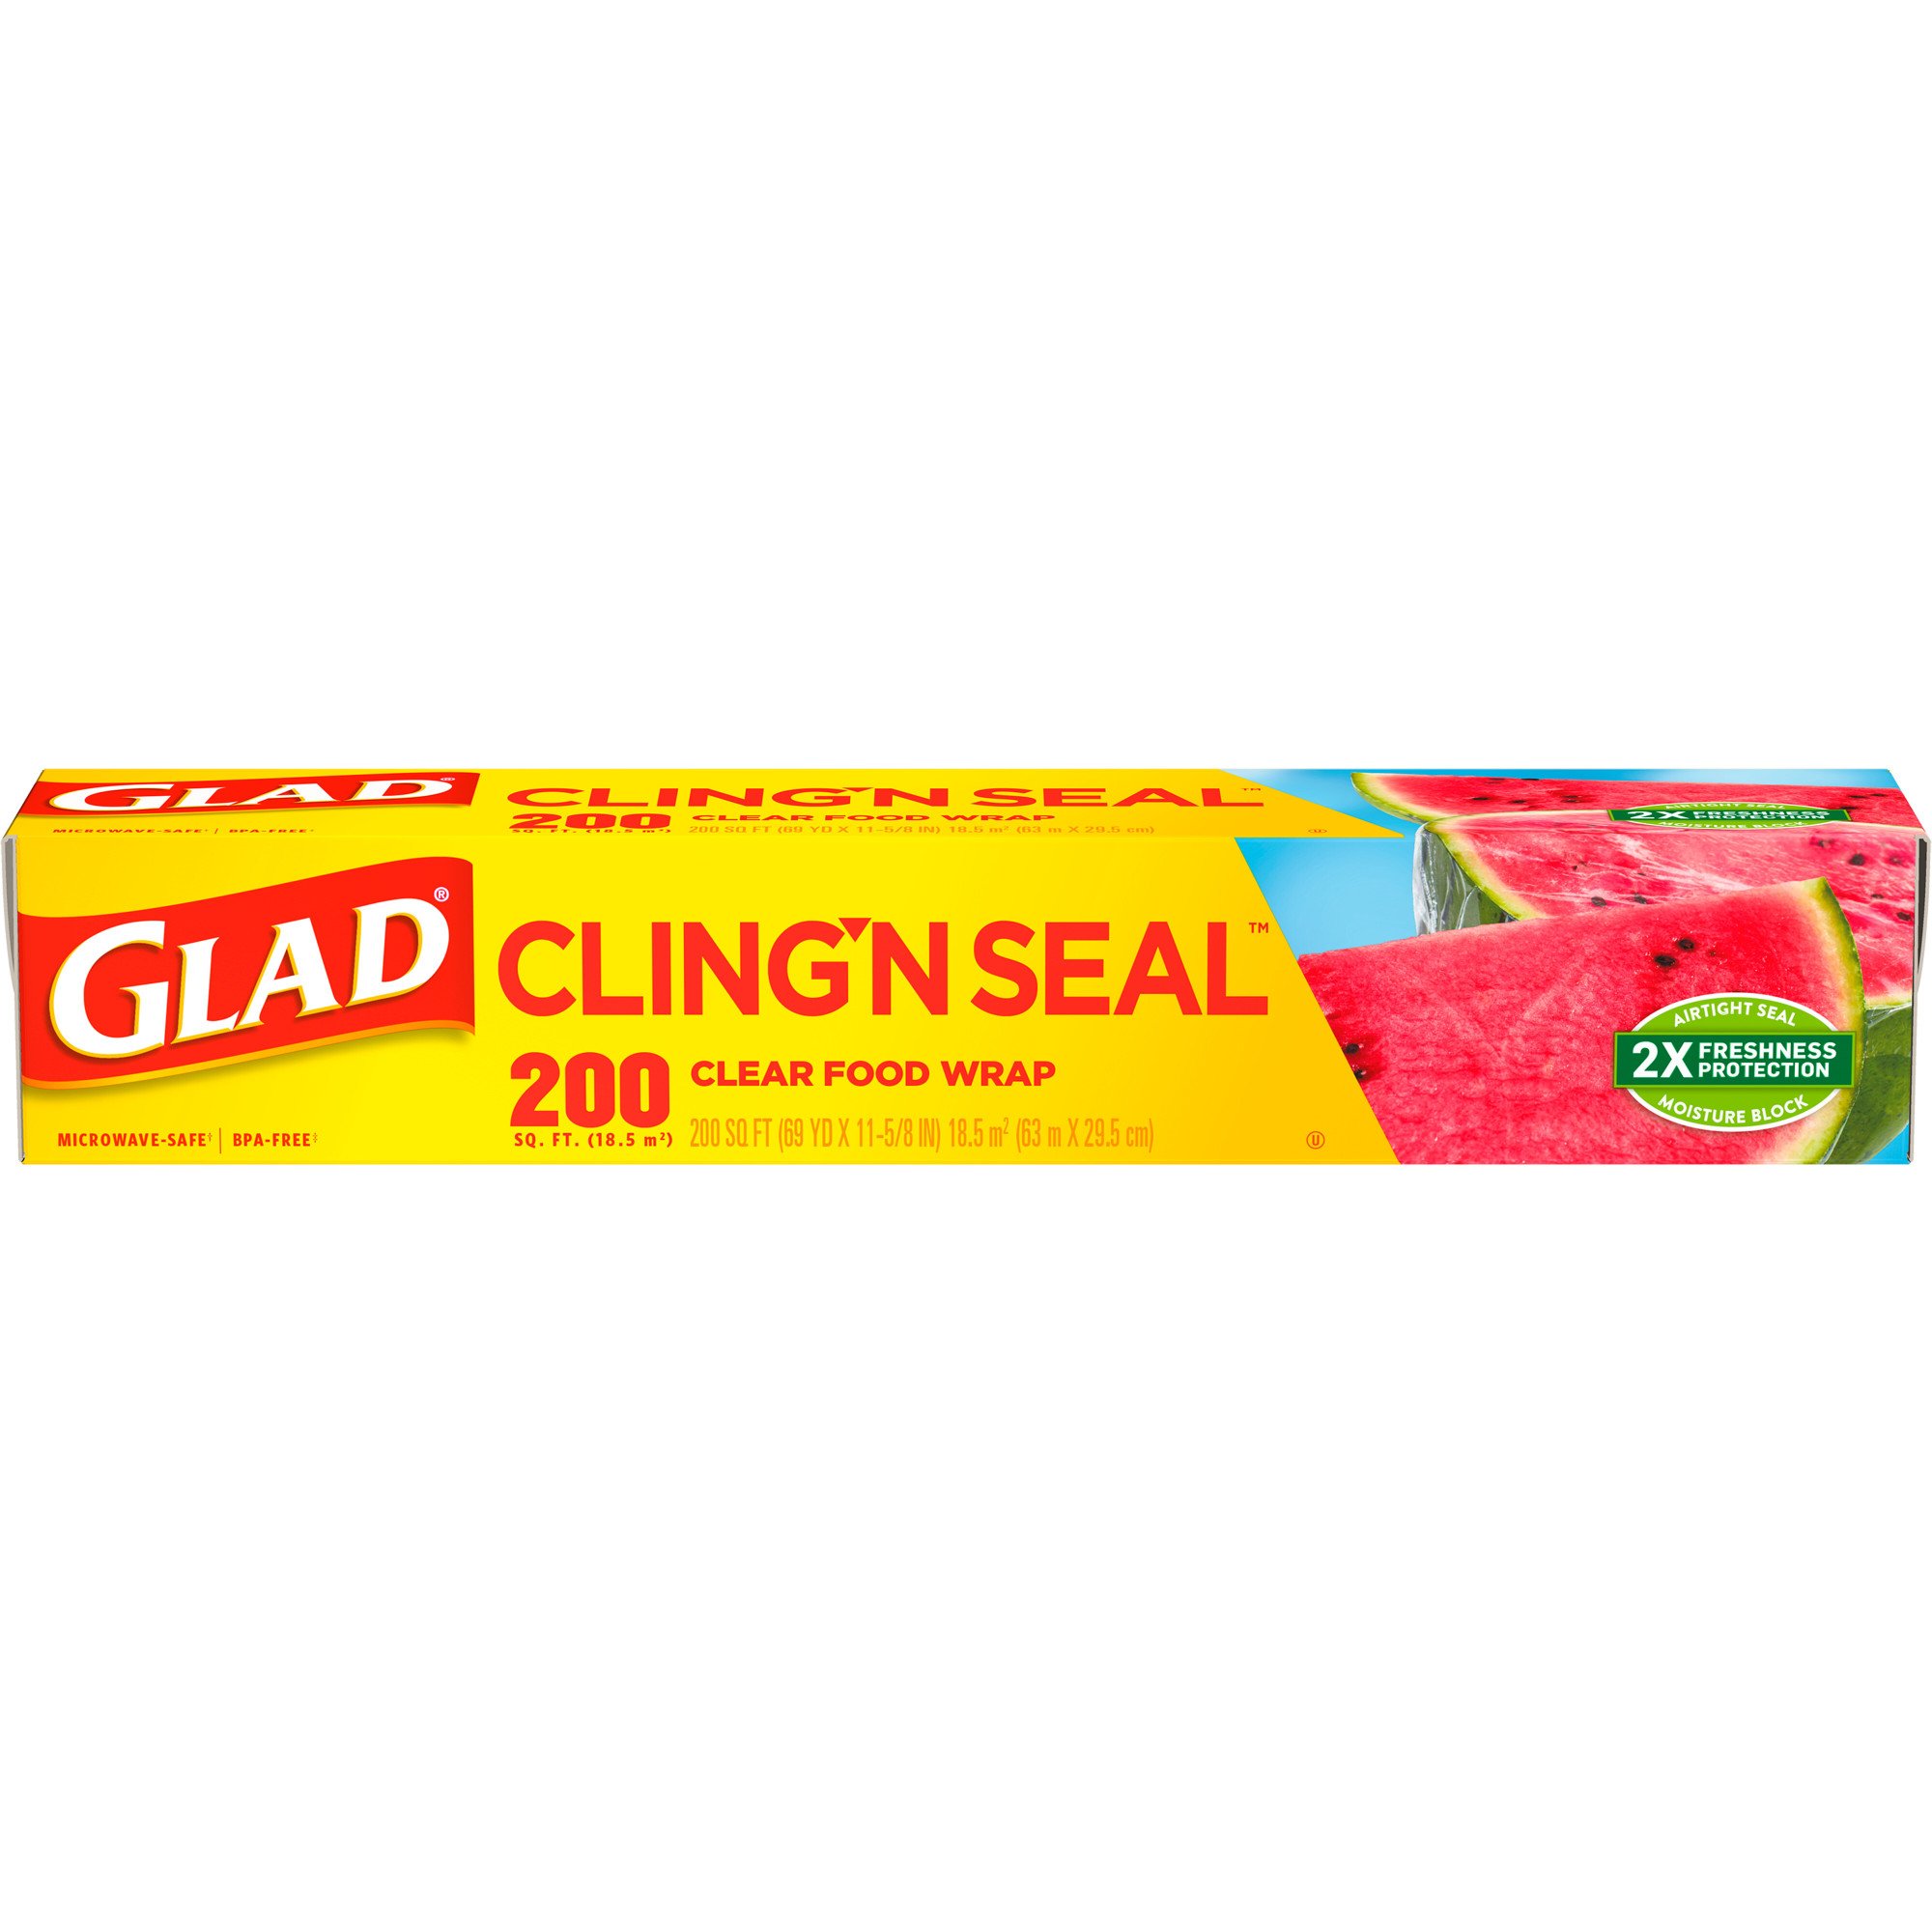 Glad - Cling Wrap, Clear Plastic Wrap